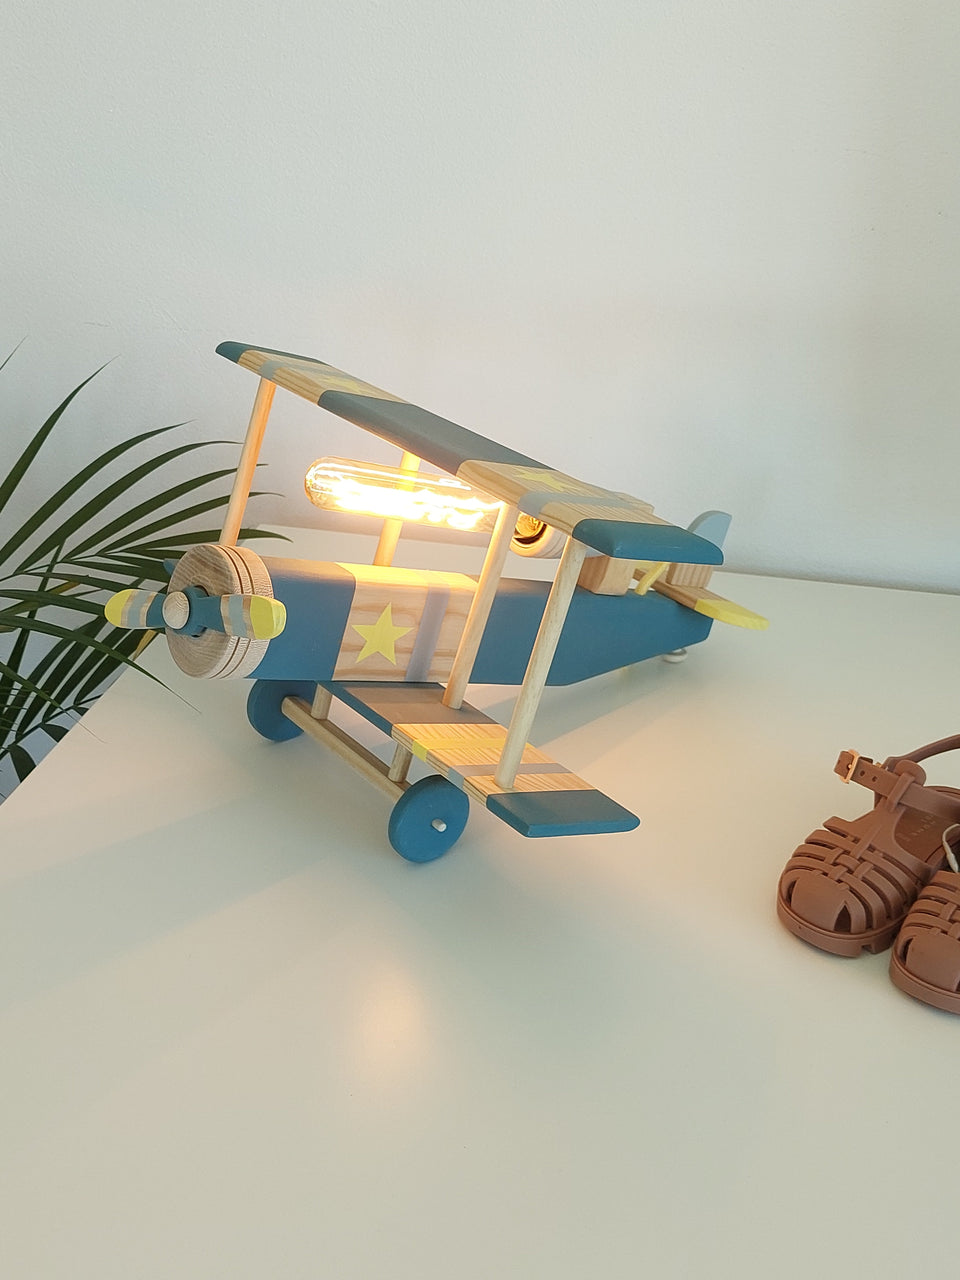 Candeeiro Avião de Mesa Azul Faraó - Airplane Table light Lamp Pharaoh Blue